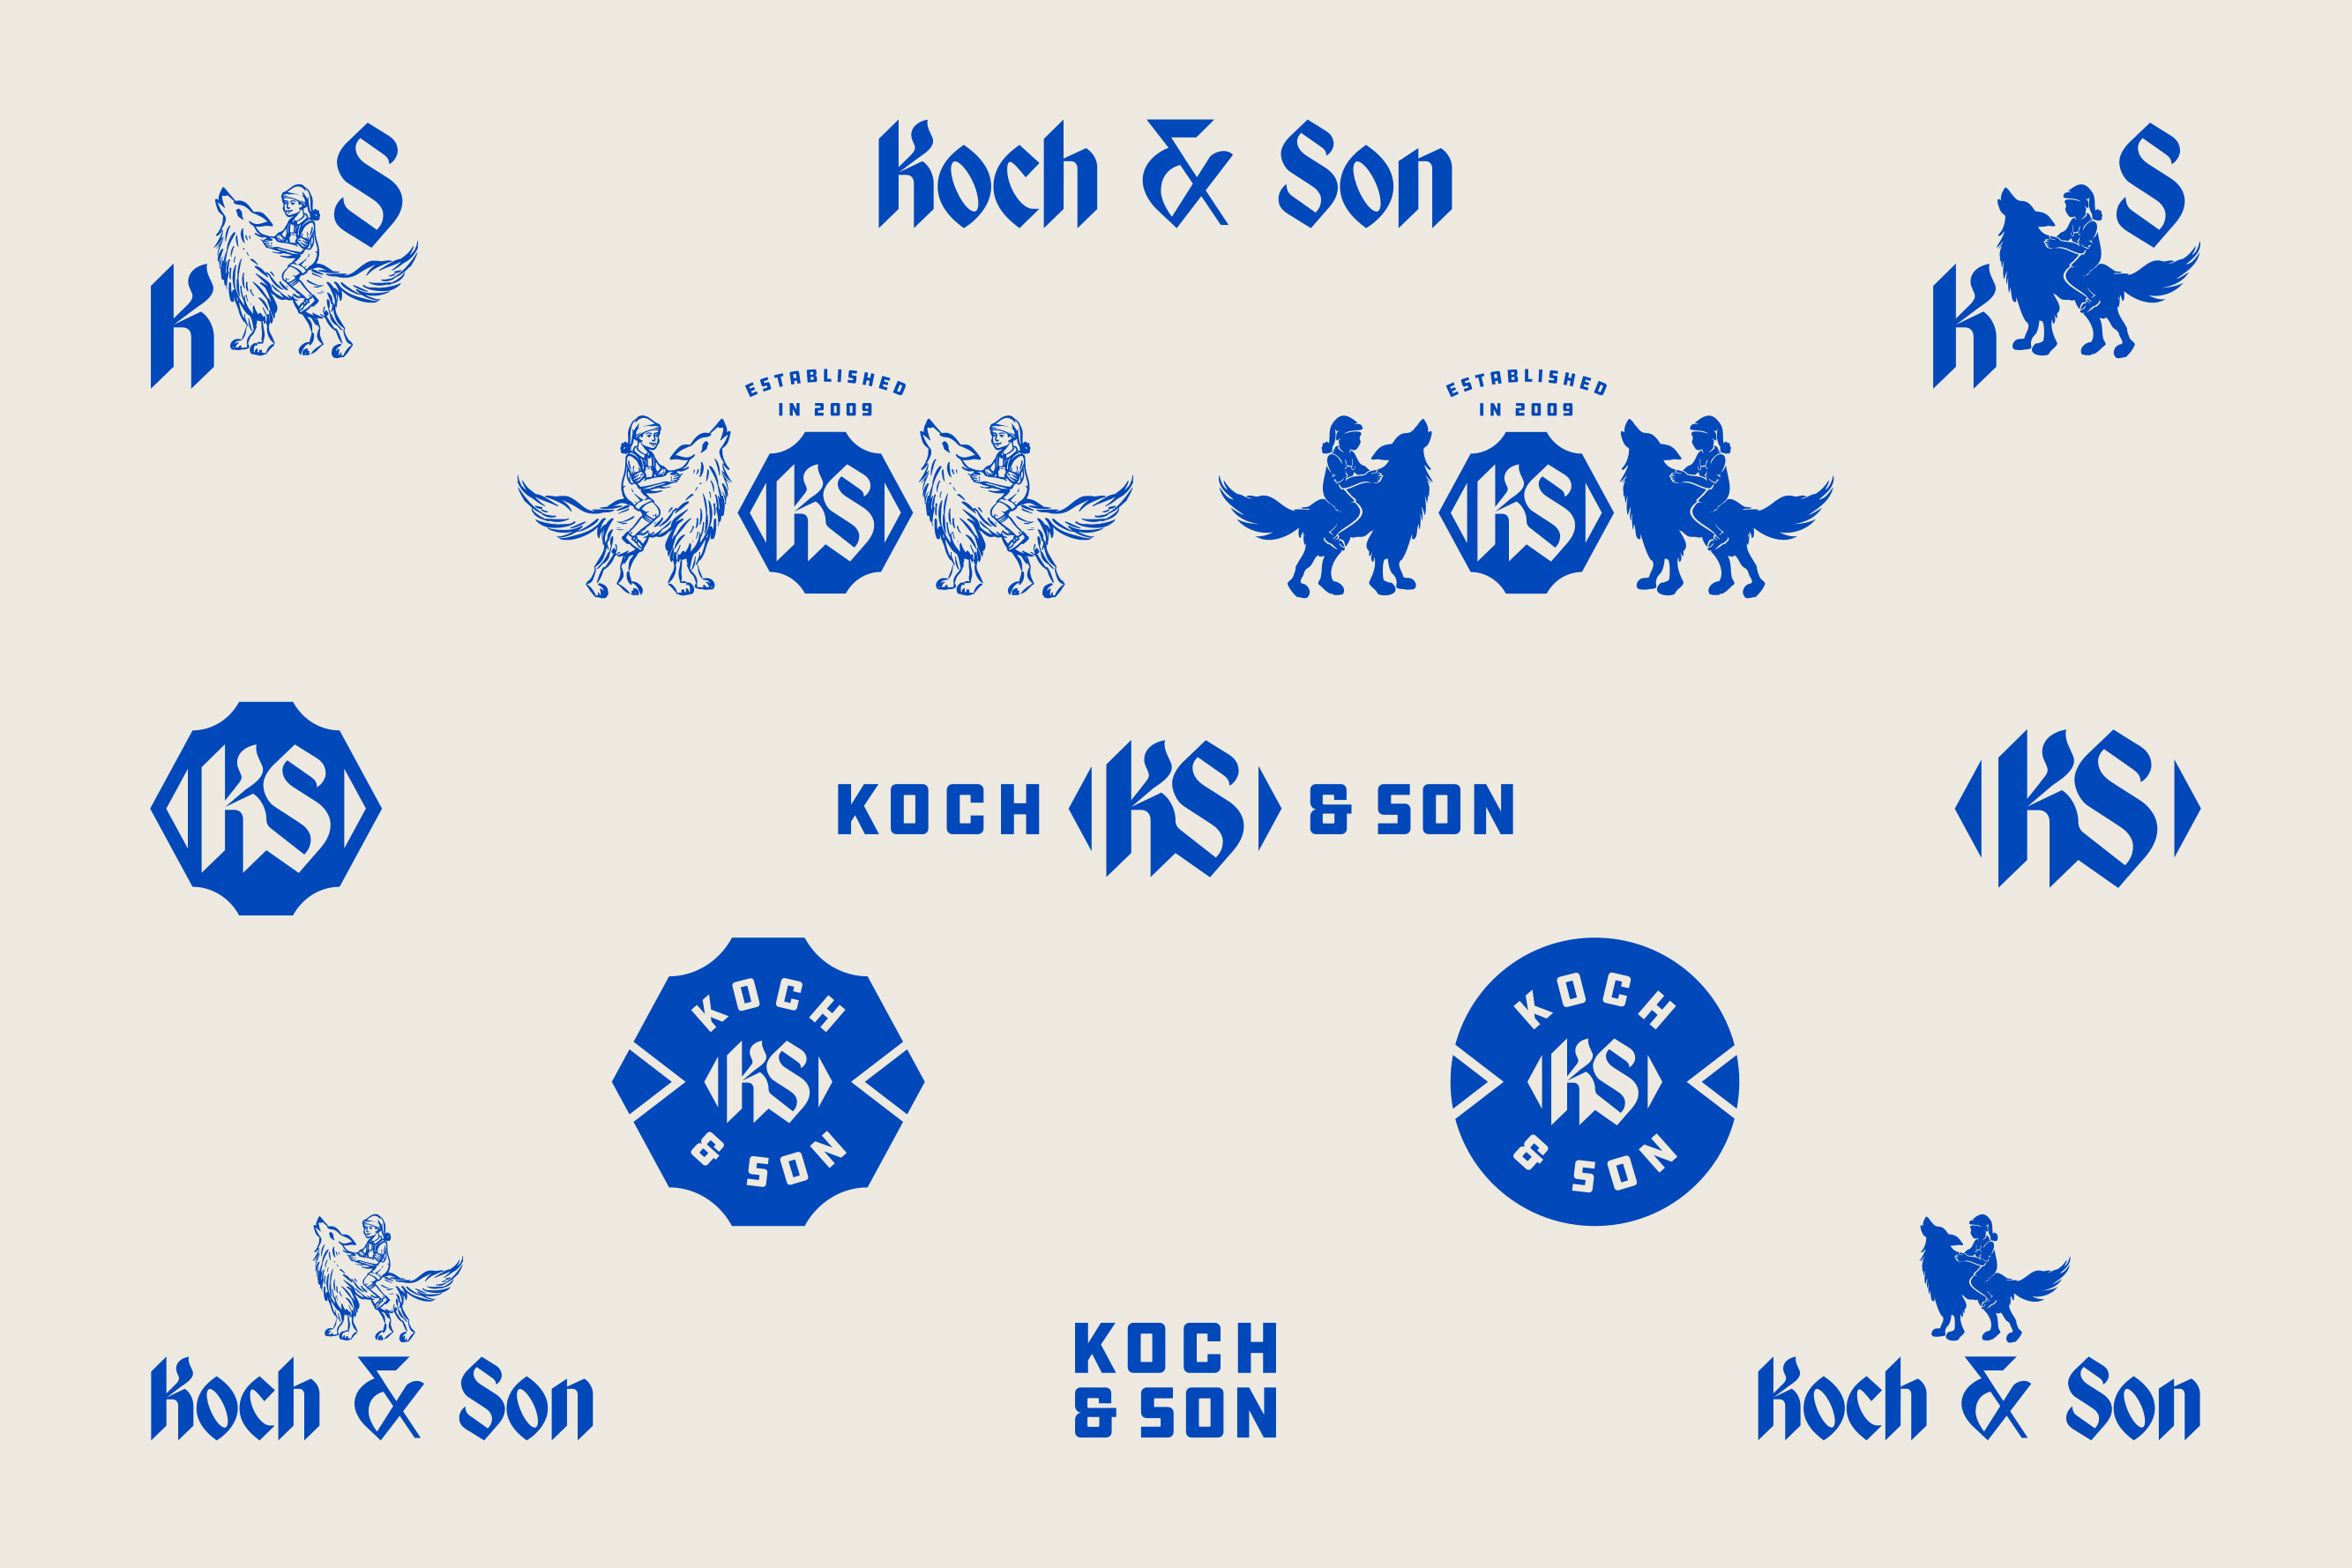 Koch & Son's Brand Identity - World Brand Design Society